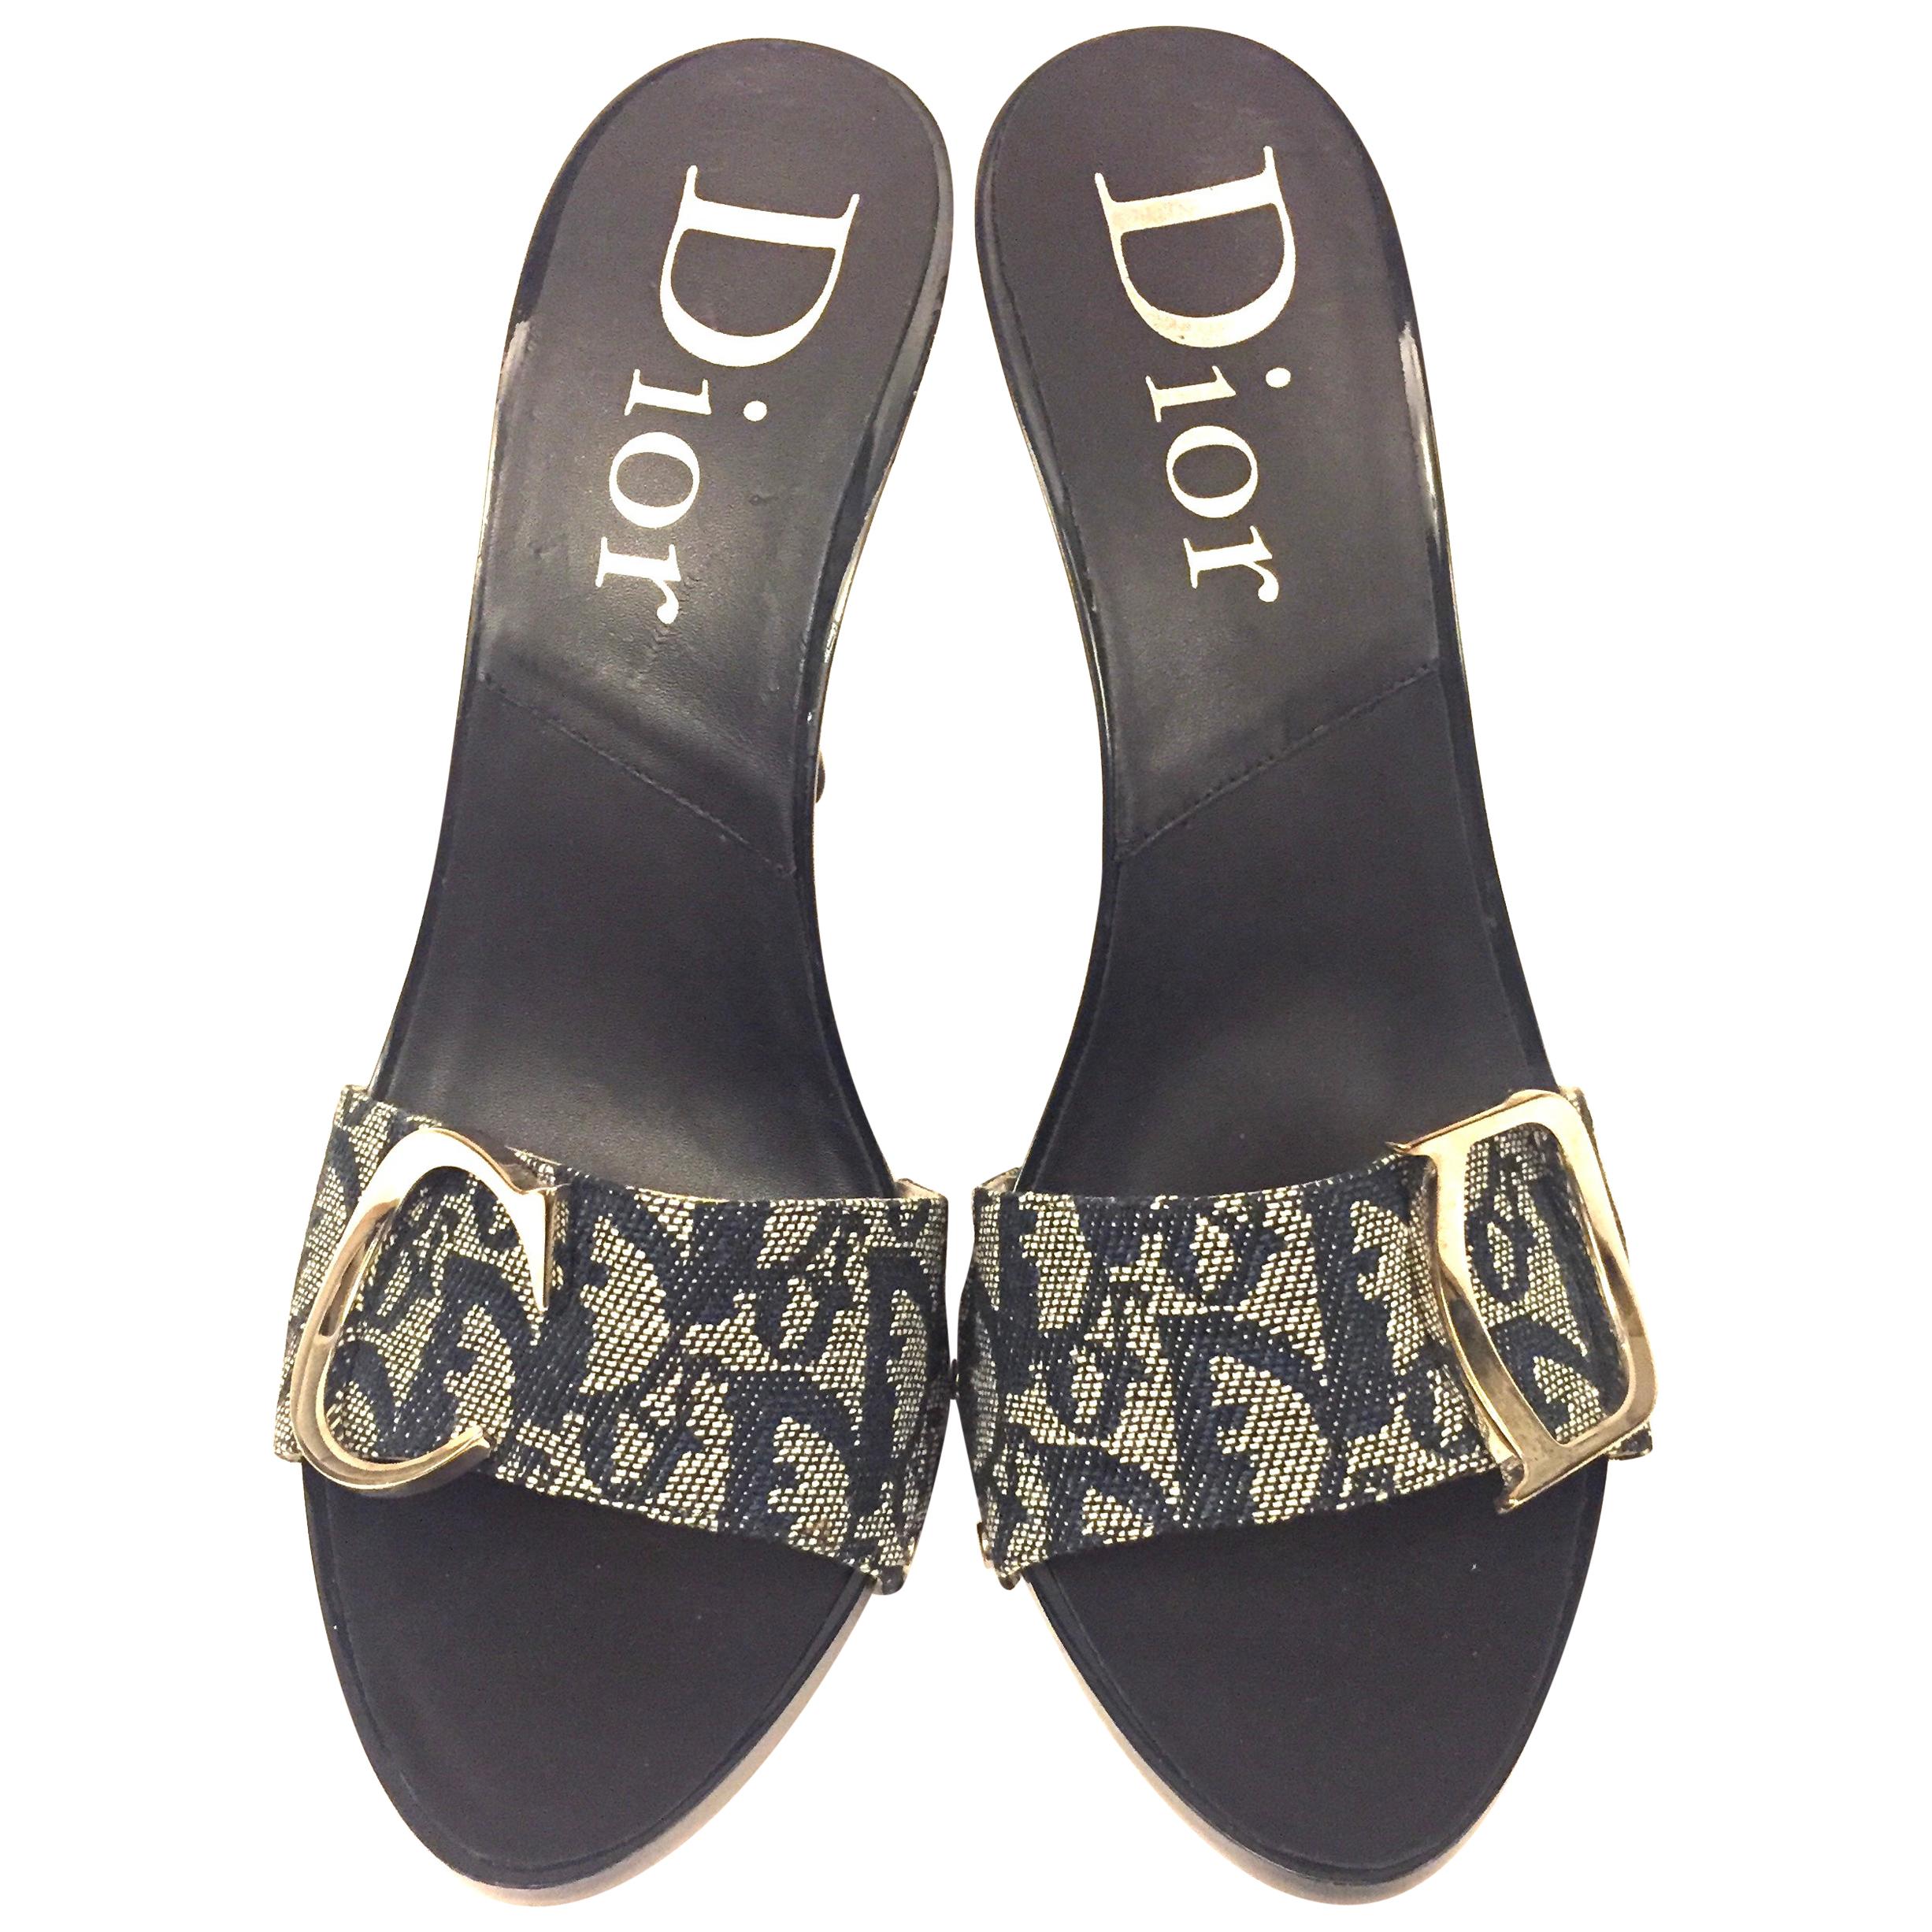 Christian Dior by John Galliano monogram denim silver toned "CD" heels